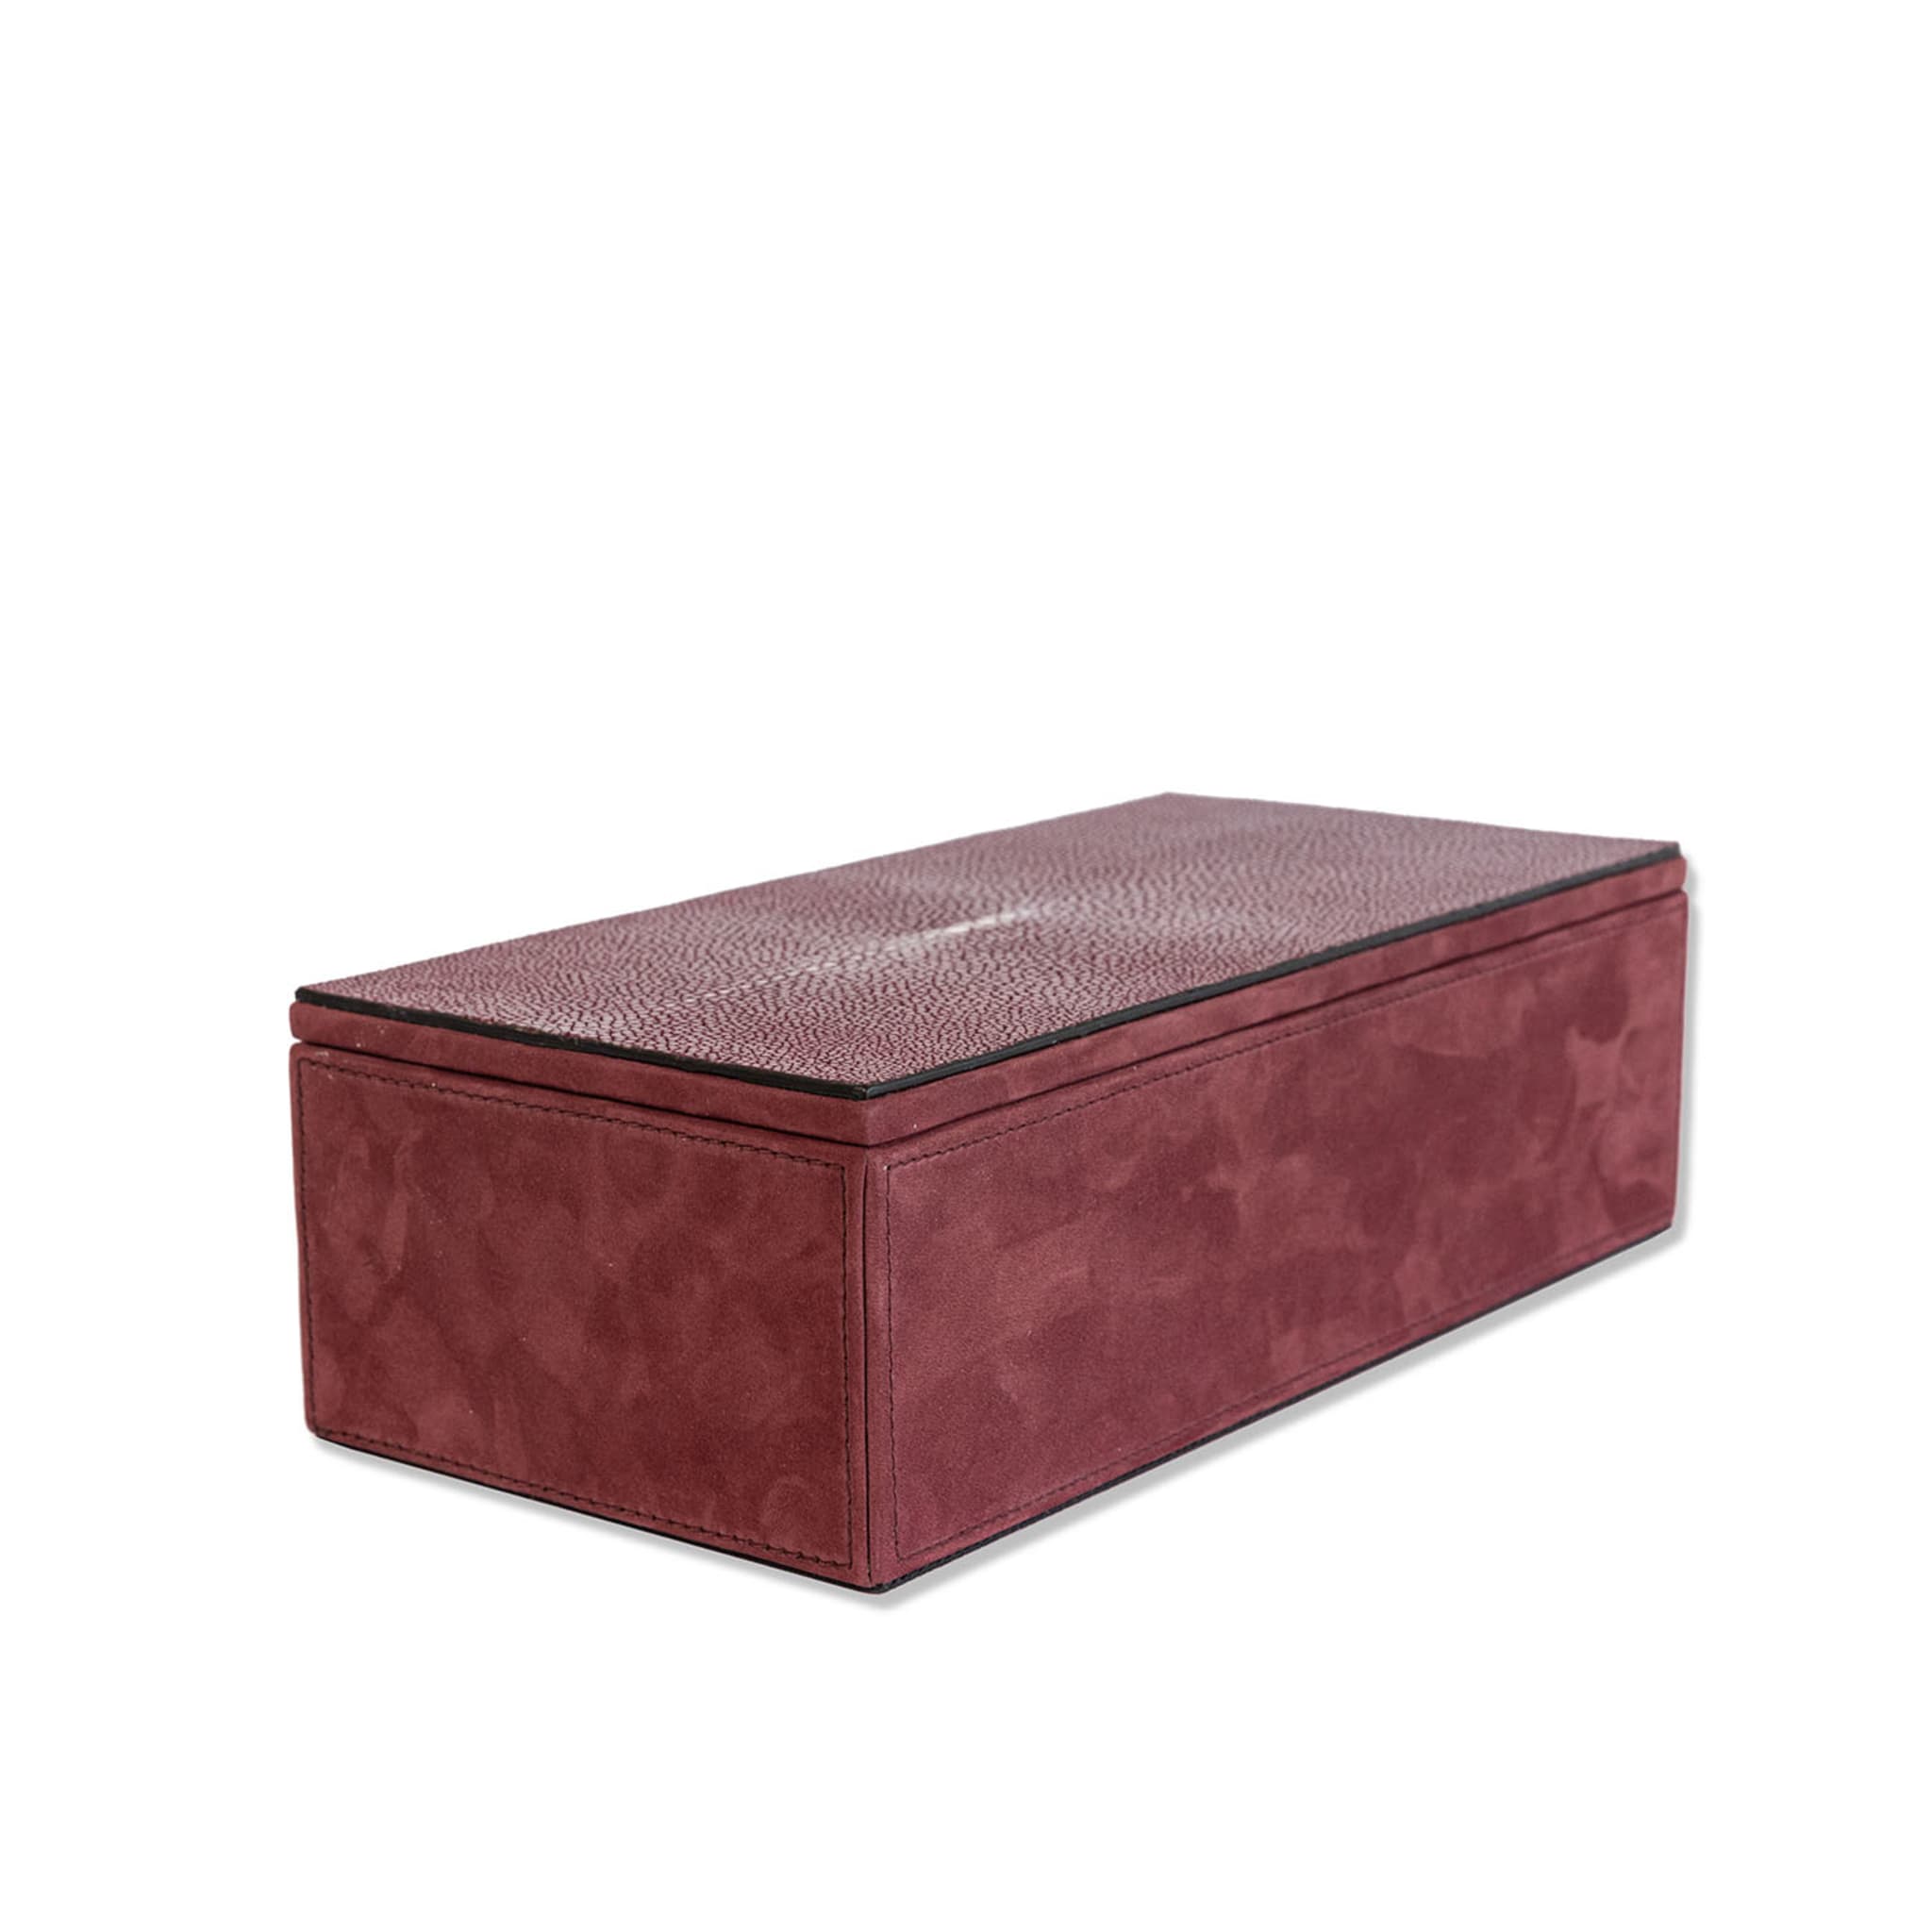 Stingray Persian Red Nubuck Leather Box - Alternative view 3